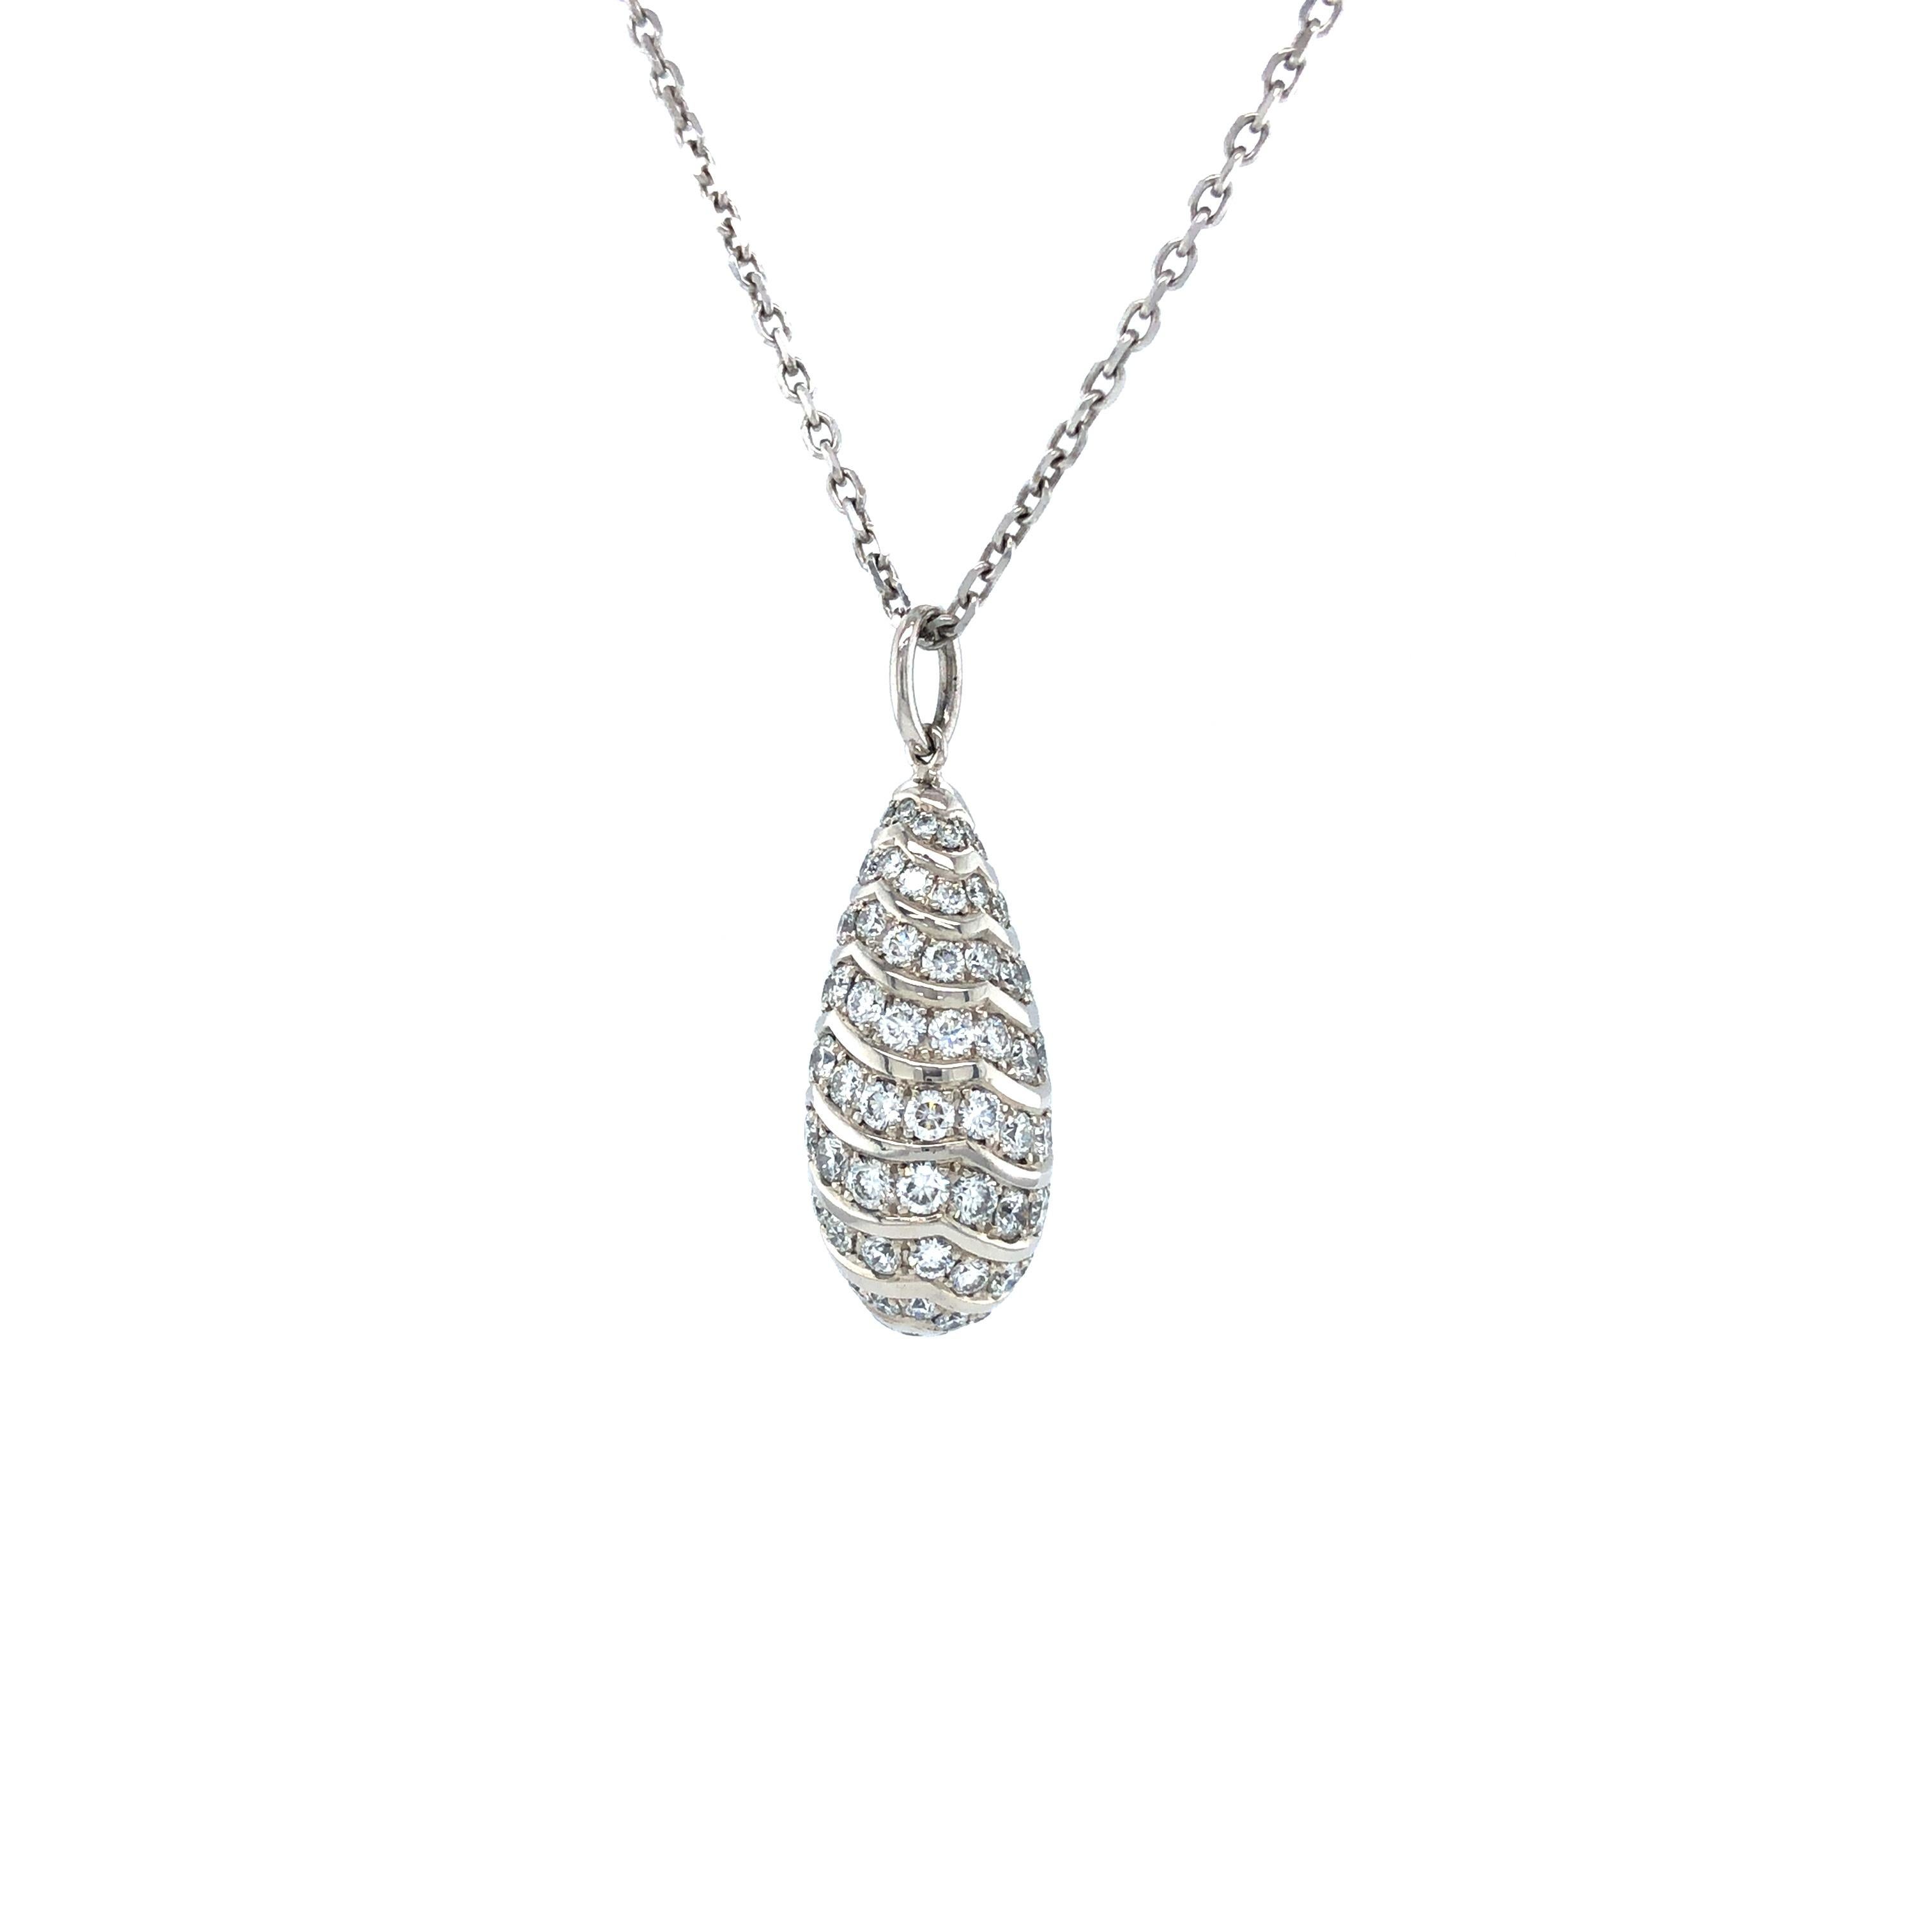 Contemporary Drop Pendant Necklace - 18k White Gold - 91 Diamonds Total 1.51 ct G VS For Sale